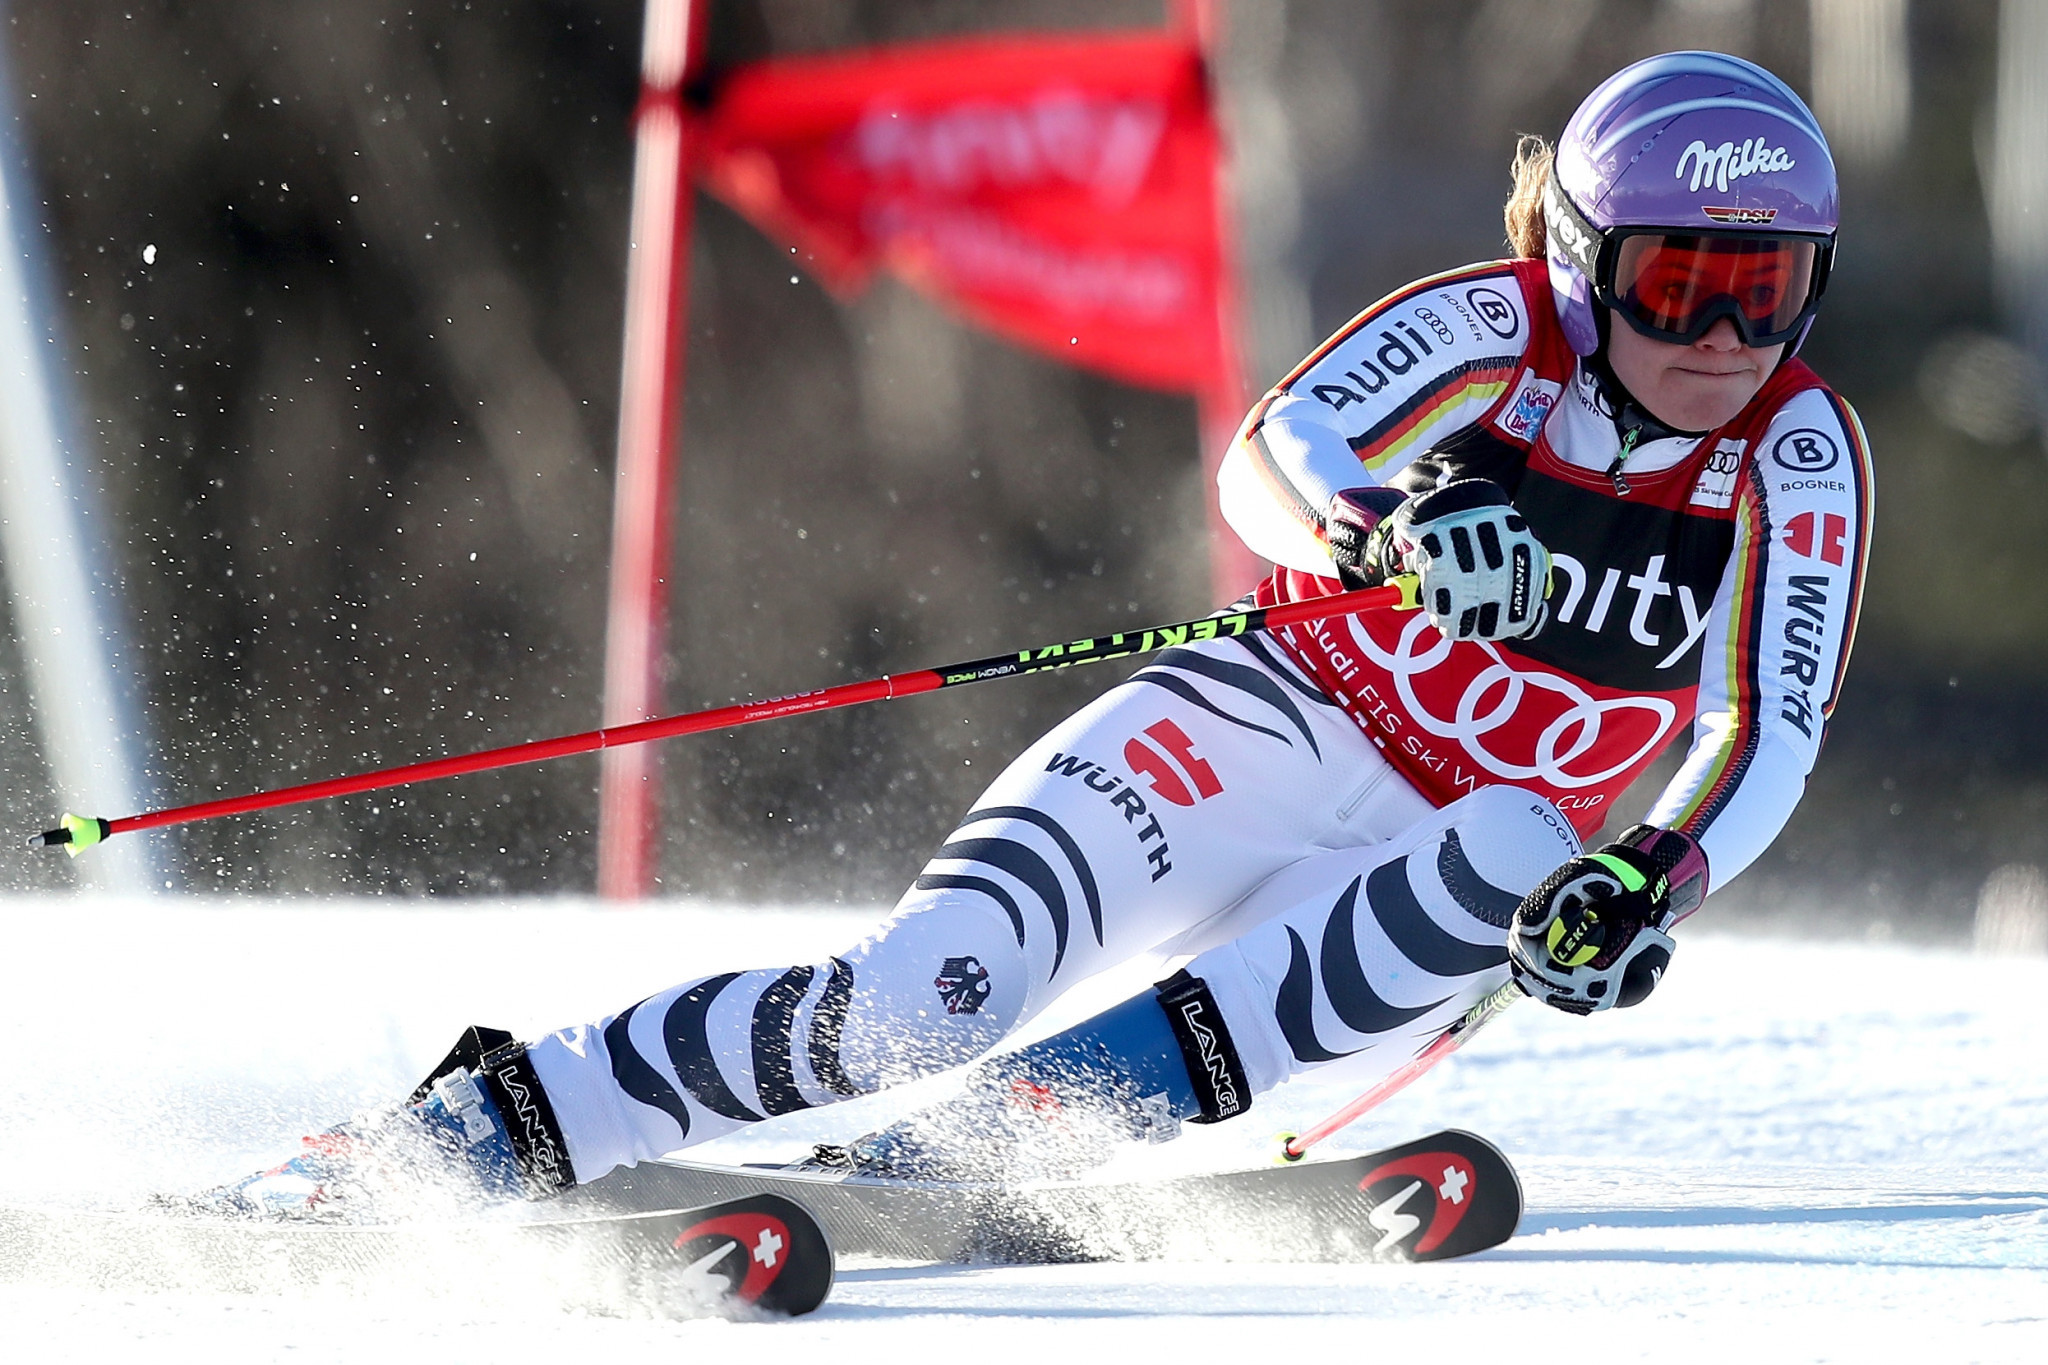 Germany’s Viktoria Rebensburg won today's women's giant slalom event in Killington ©Getty Images